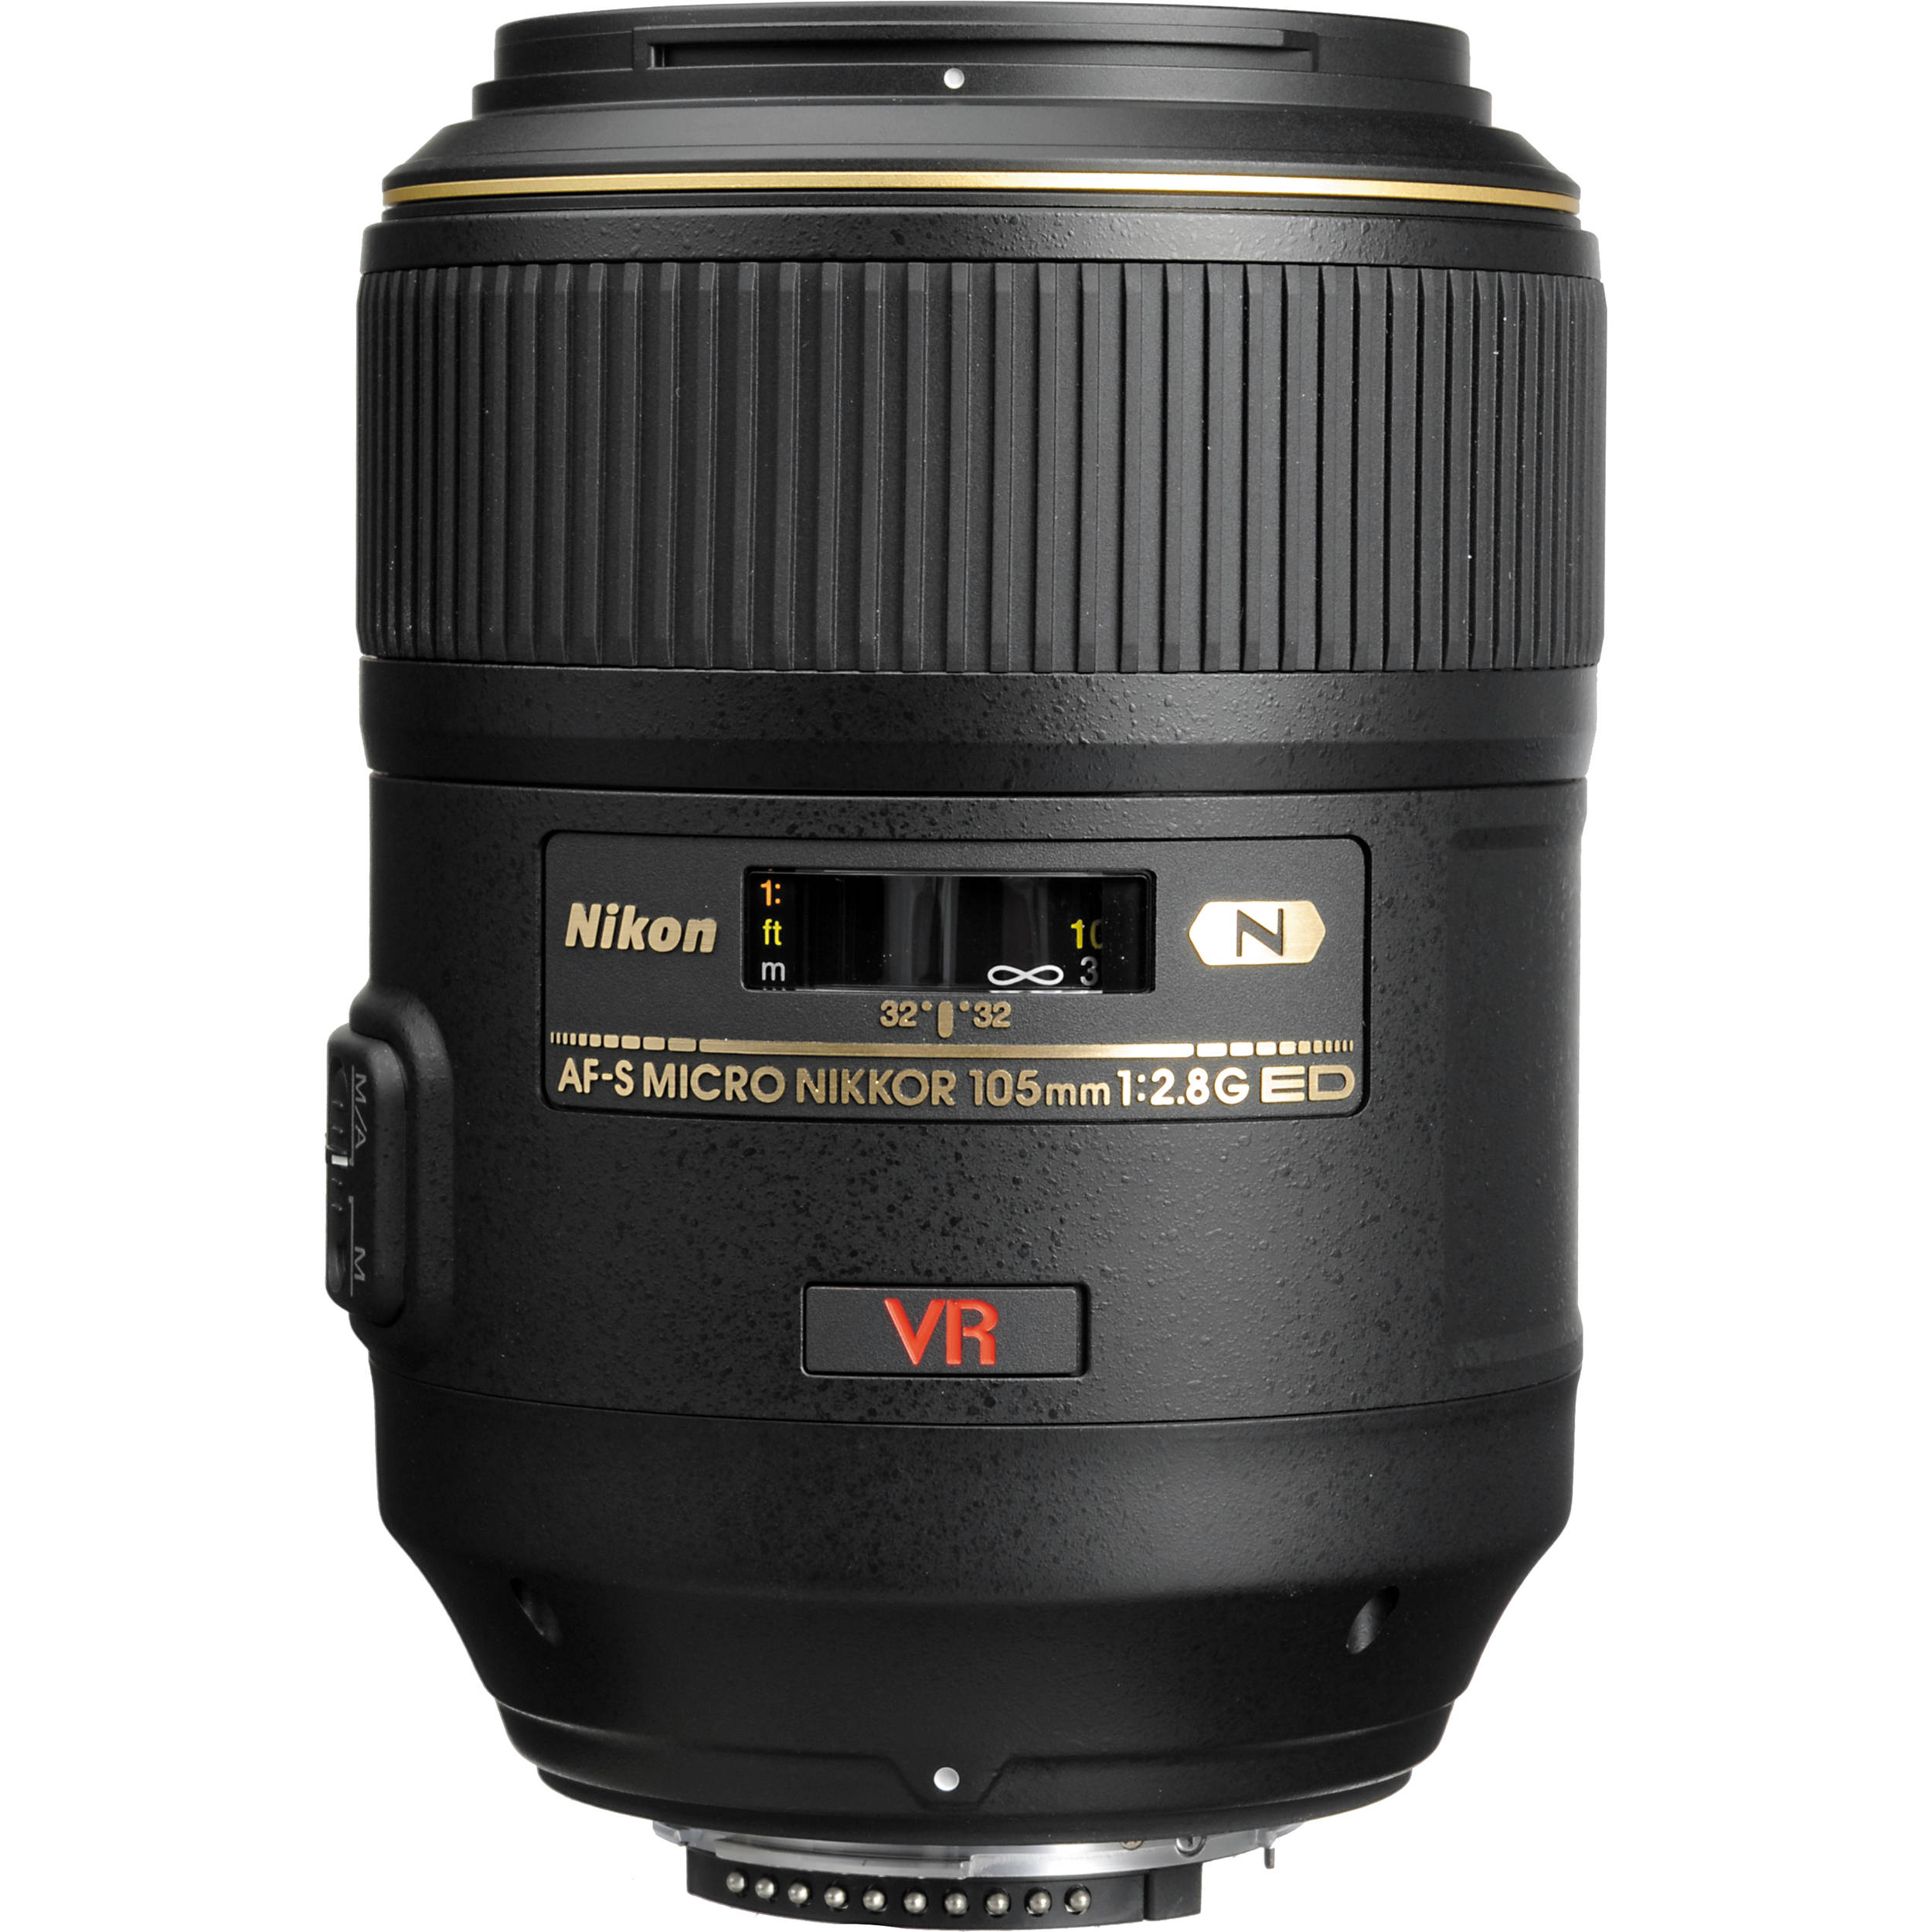 Vr micro. Nikon 105mm f/2.8g if-ed af-s VR Micro-Nikkor. Nikon af-s Micro Nikkor 105mm 1:2,8g ed. Nikon 105 2.8 macro. Af-s Nikkor 105 mm f/2.8g Micro VR if-ed.